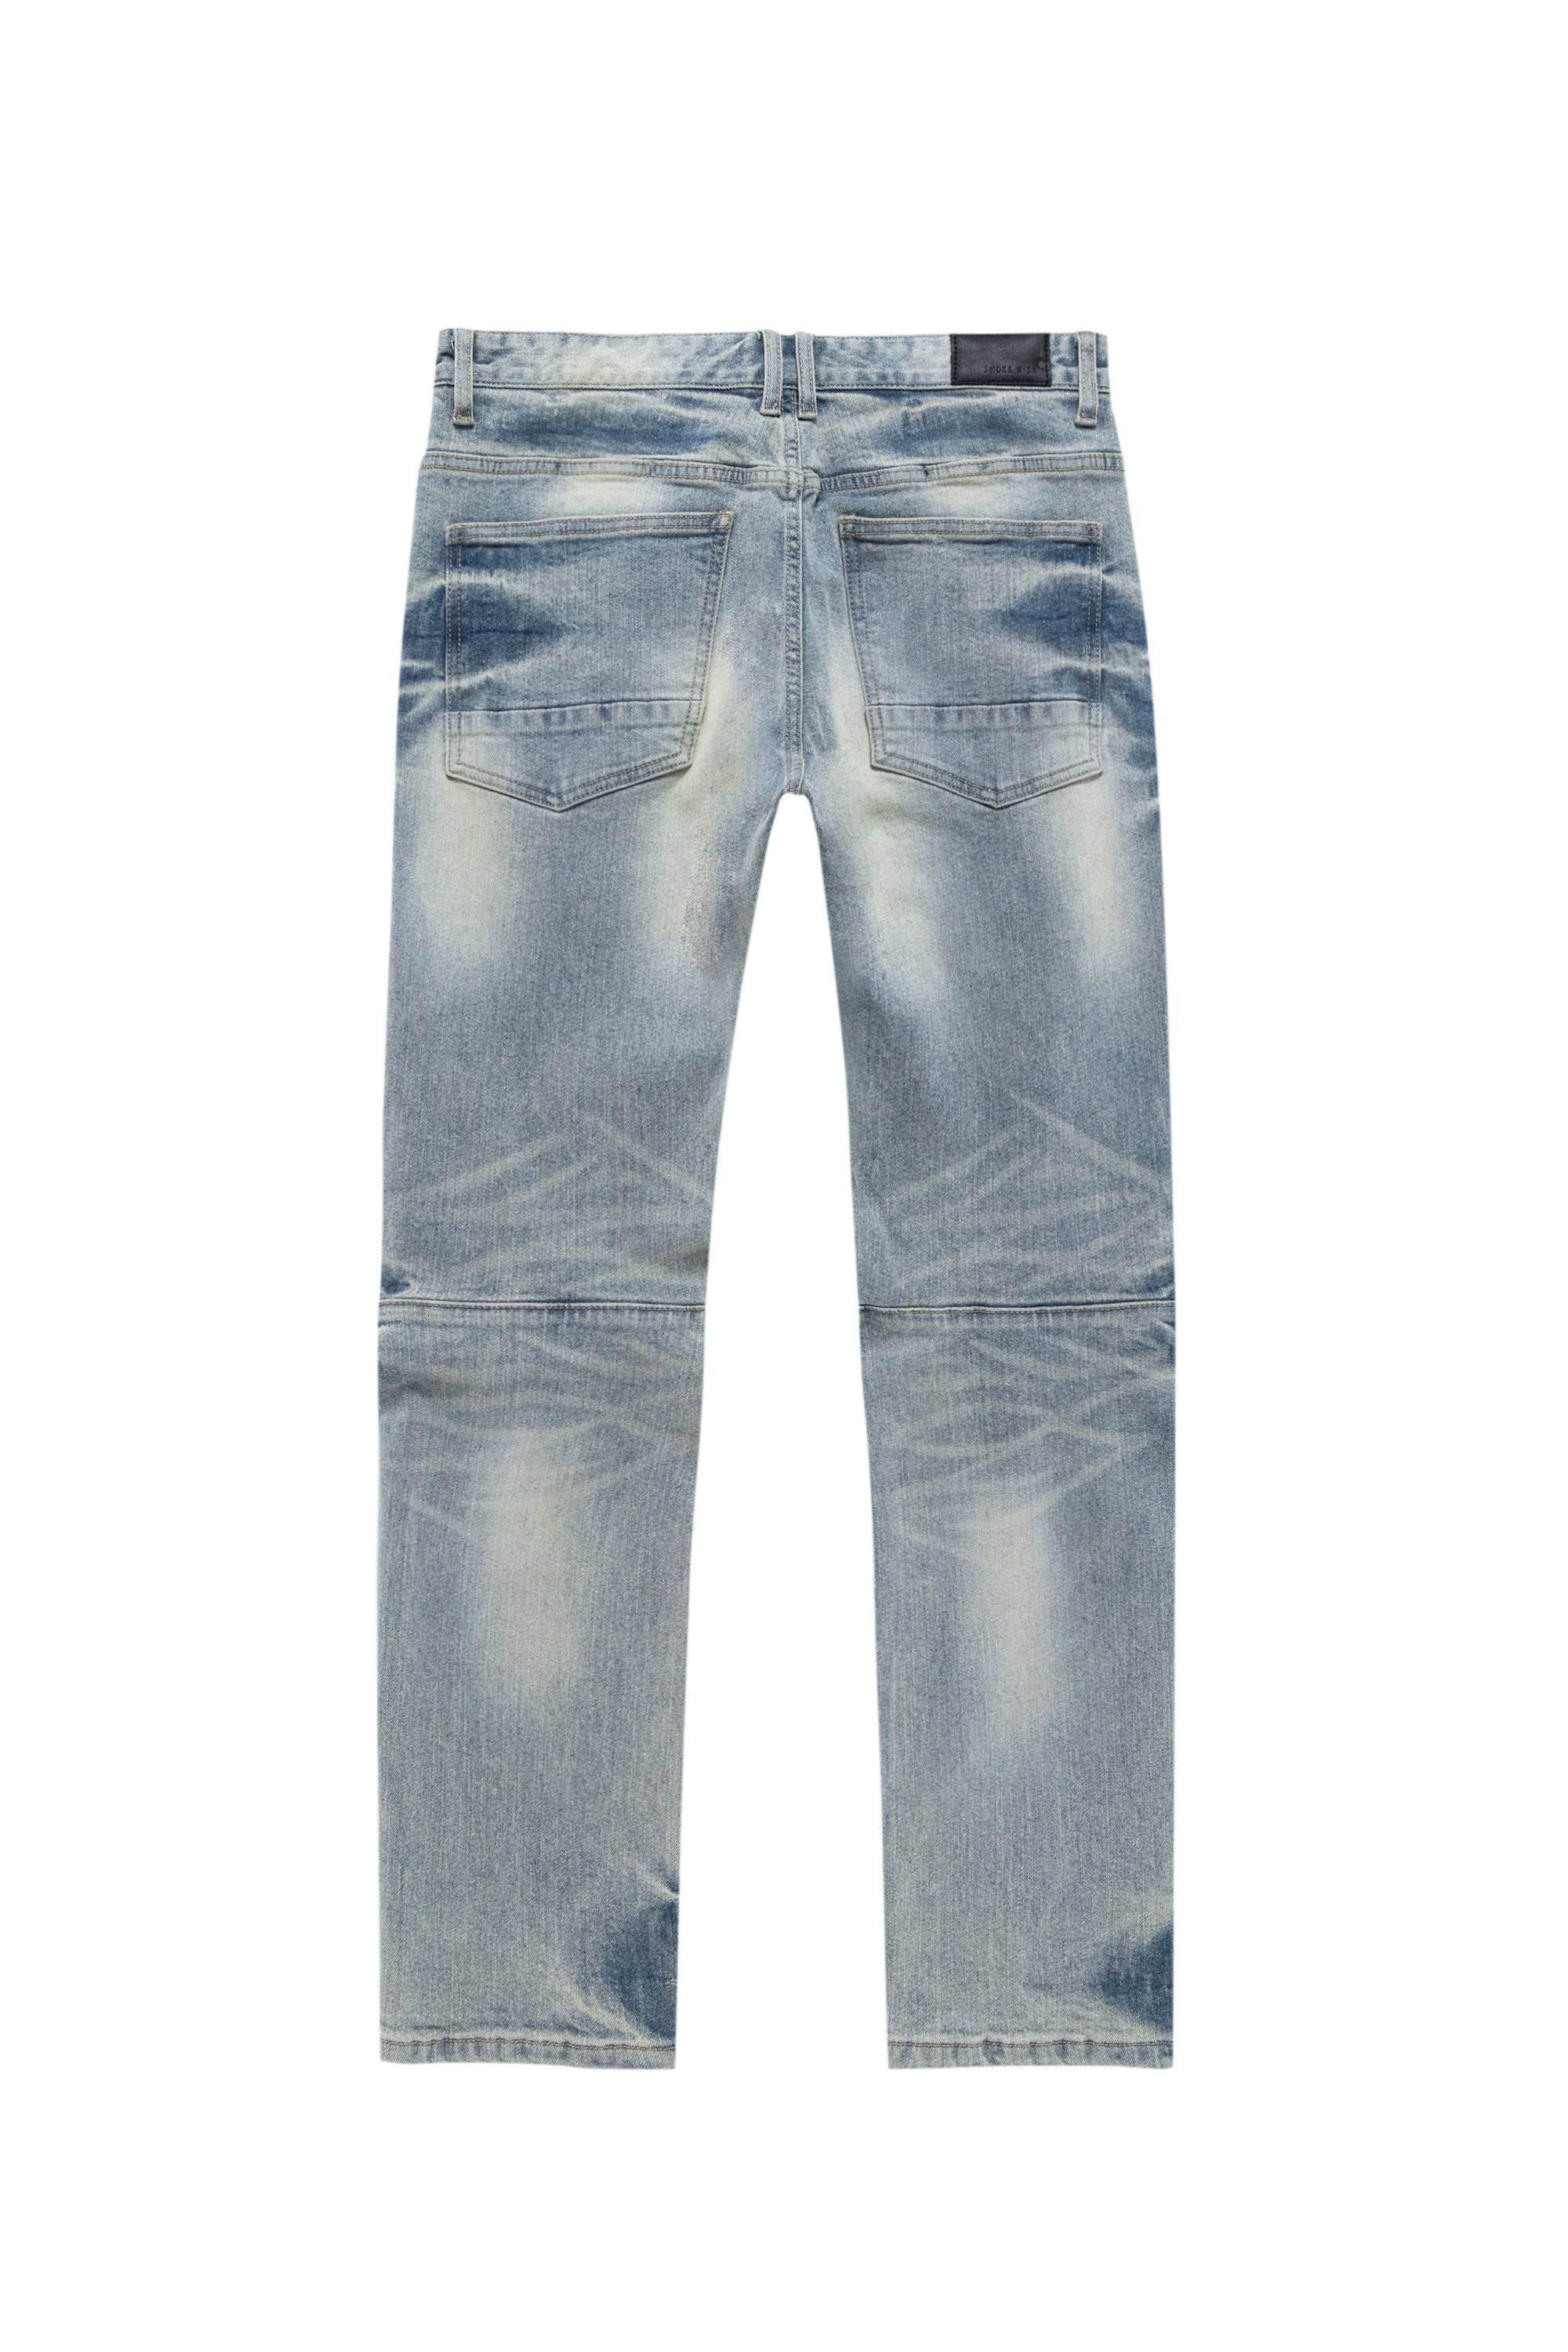 Smoke Rise JP21737 Jeans, Goblin Blue – Jeanius Closet